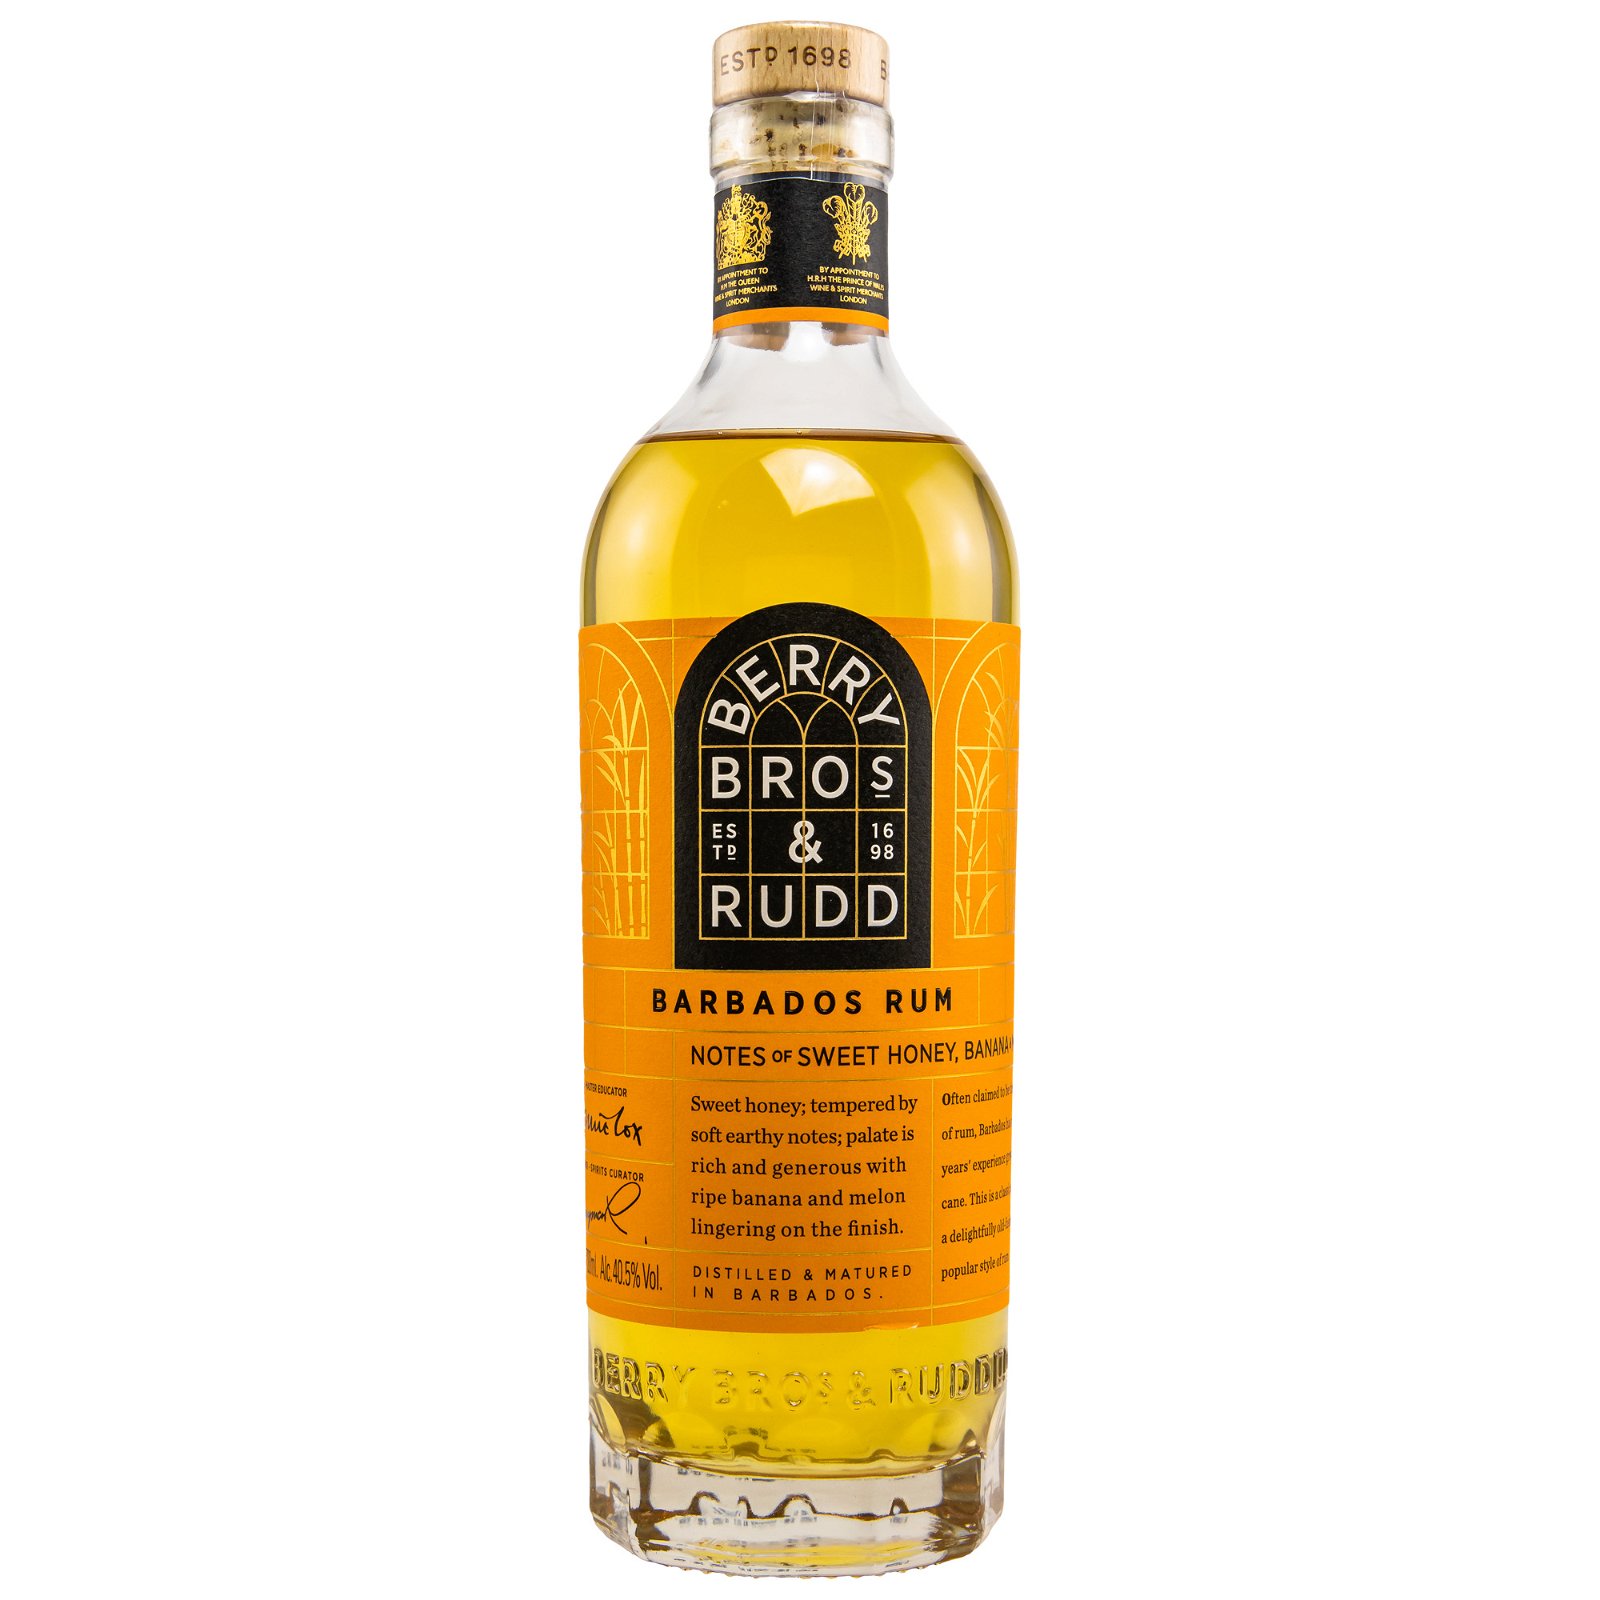 Barbados Rum Classic Range (Berry Bros. & Rudd)